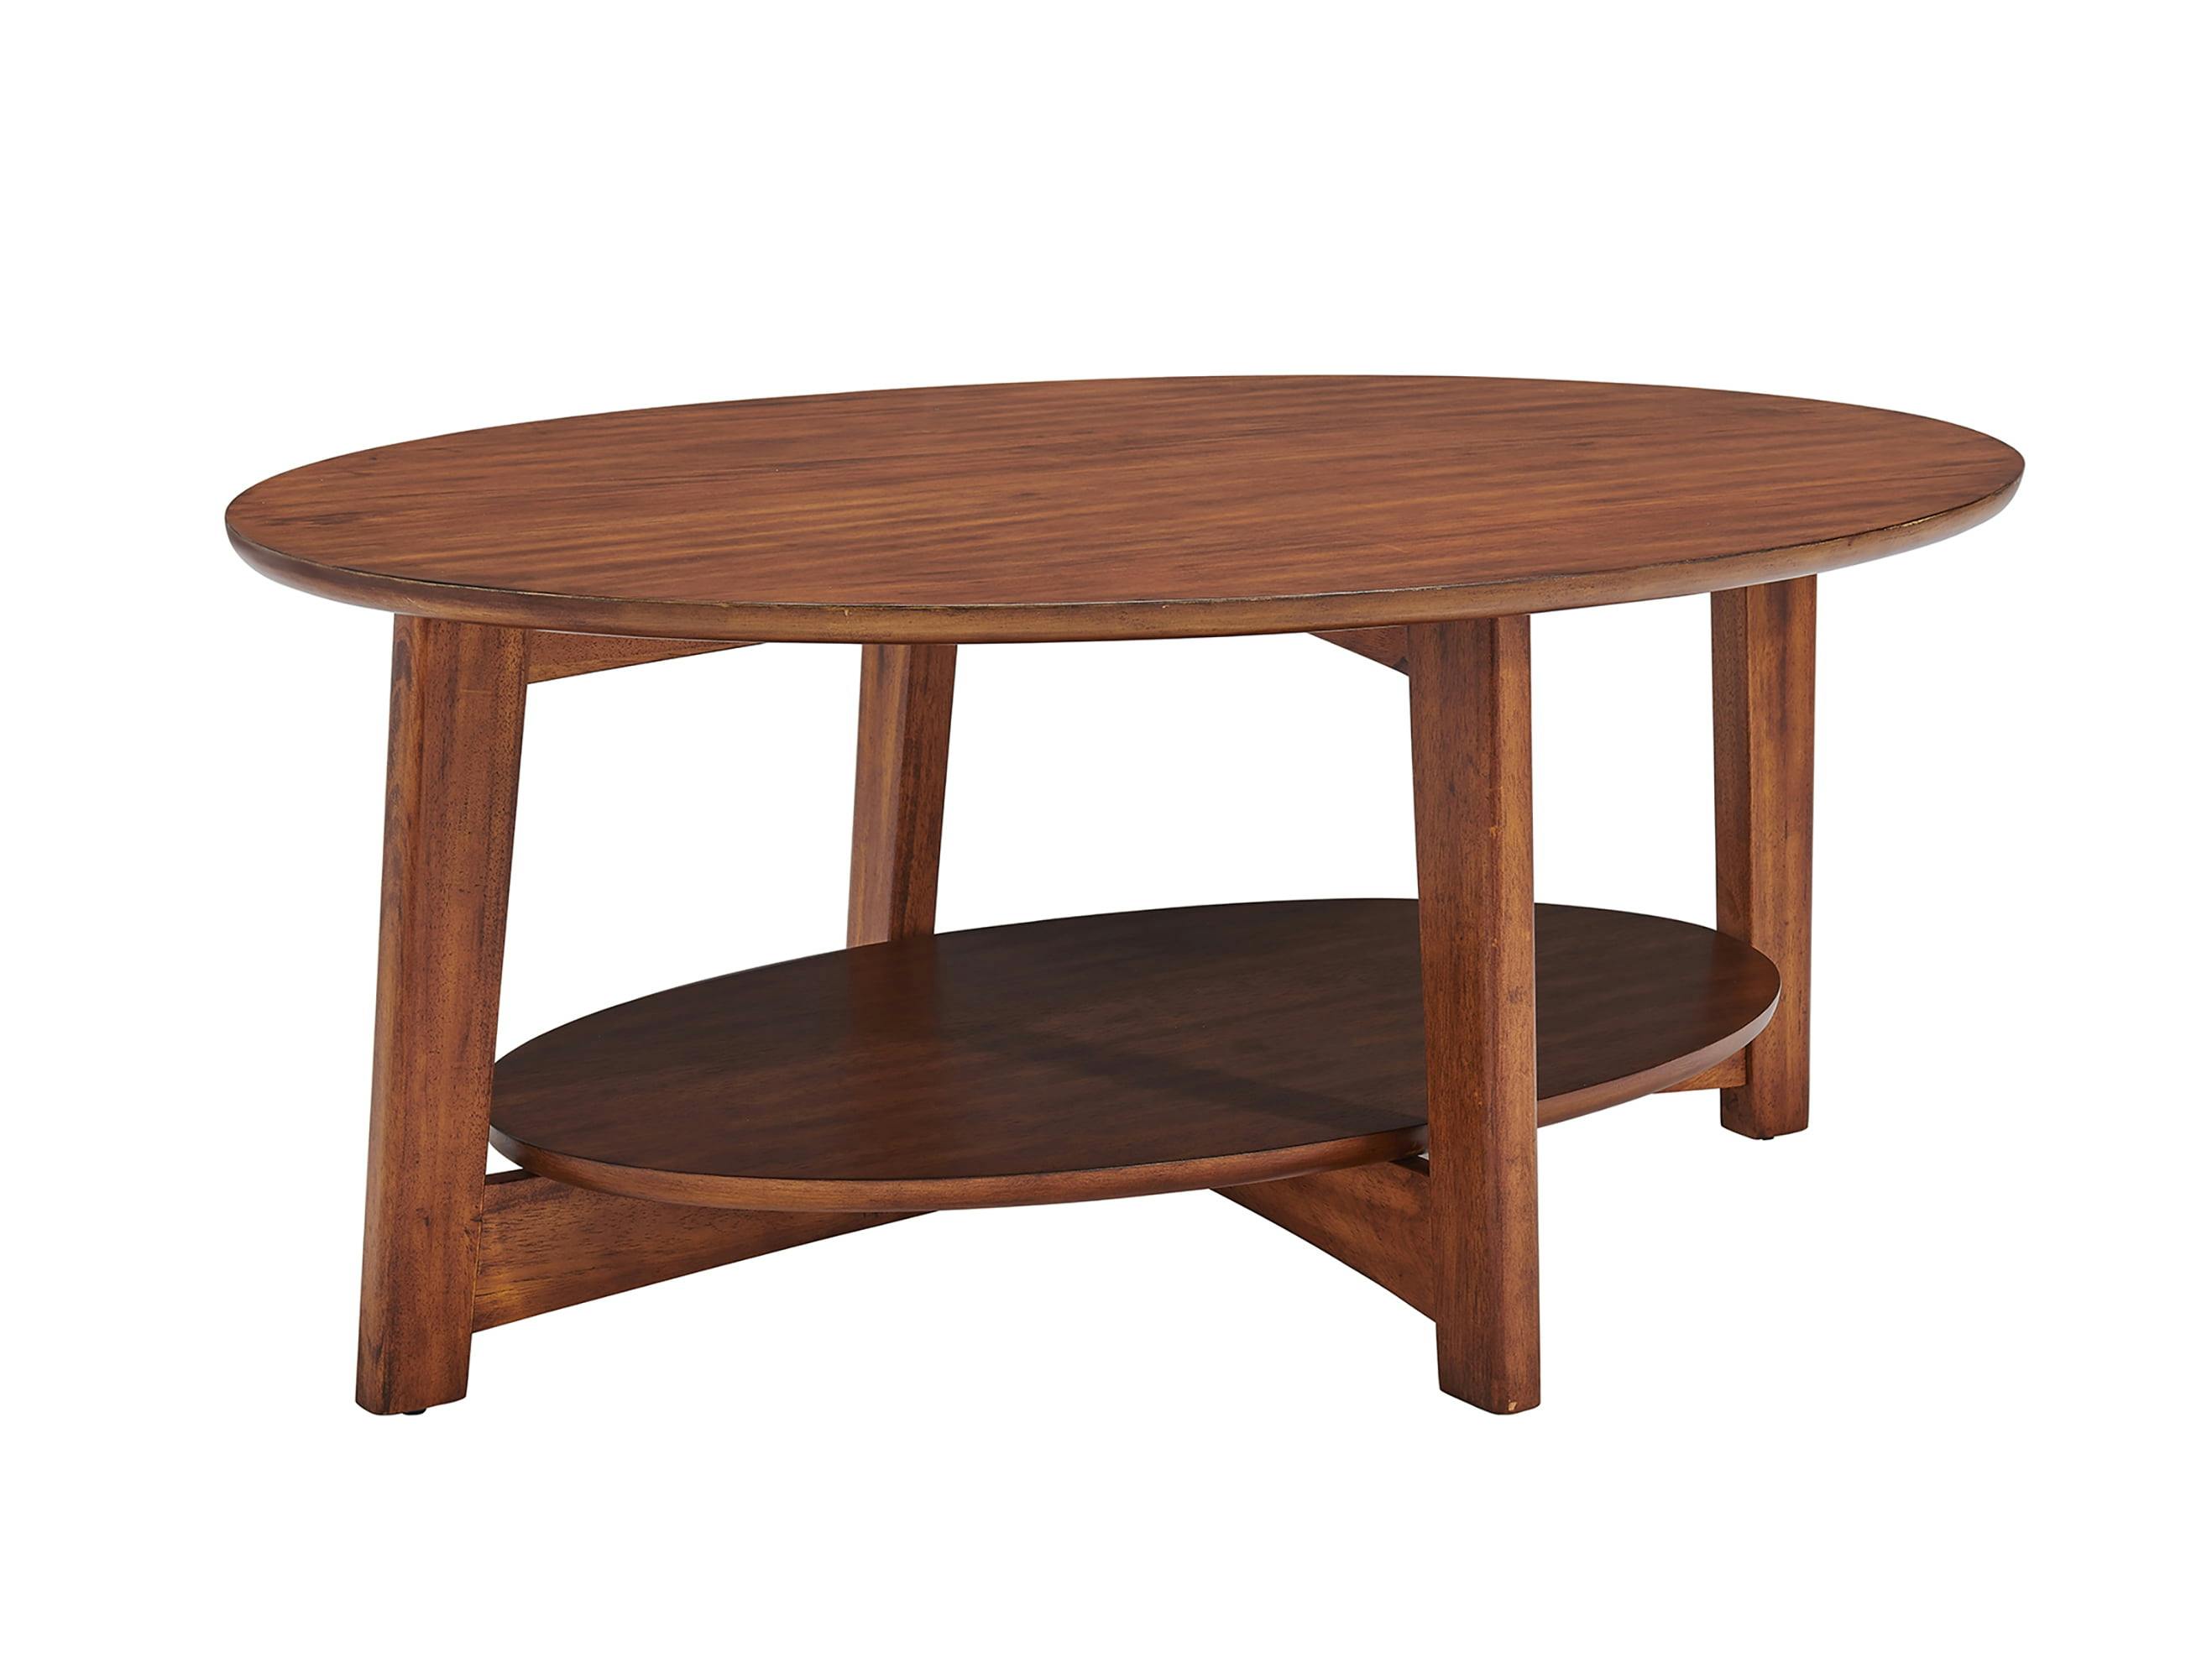 Elegant Oval Mid-Century Chestnut Wood Coffee Table with Floating Shelf